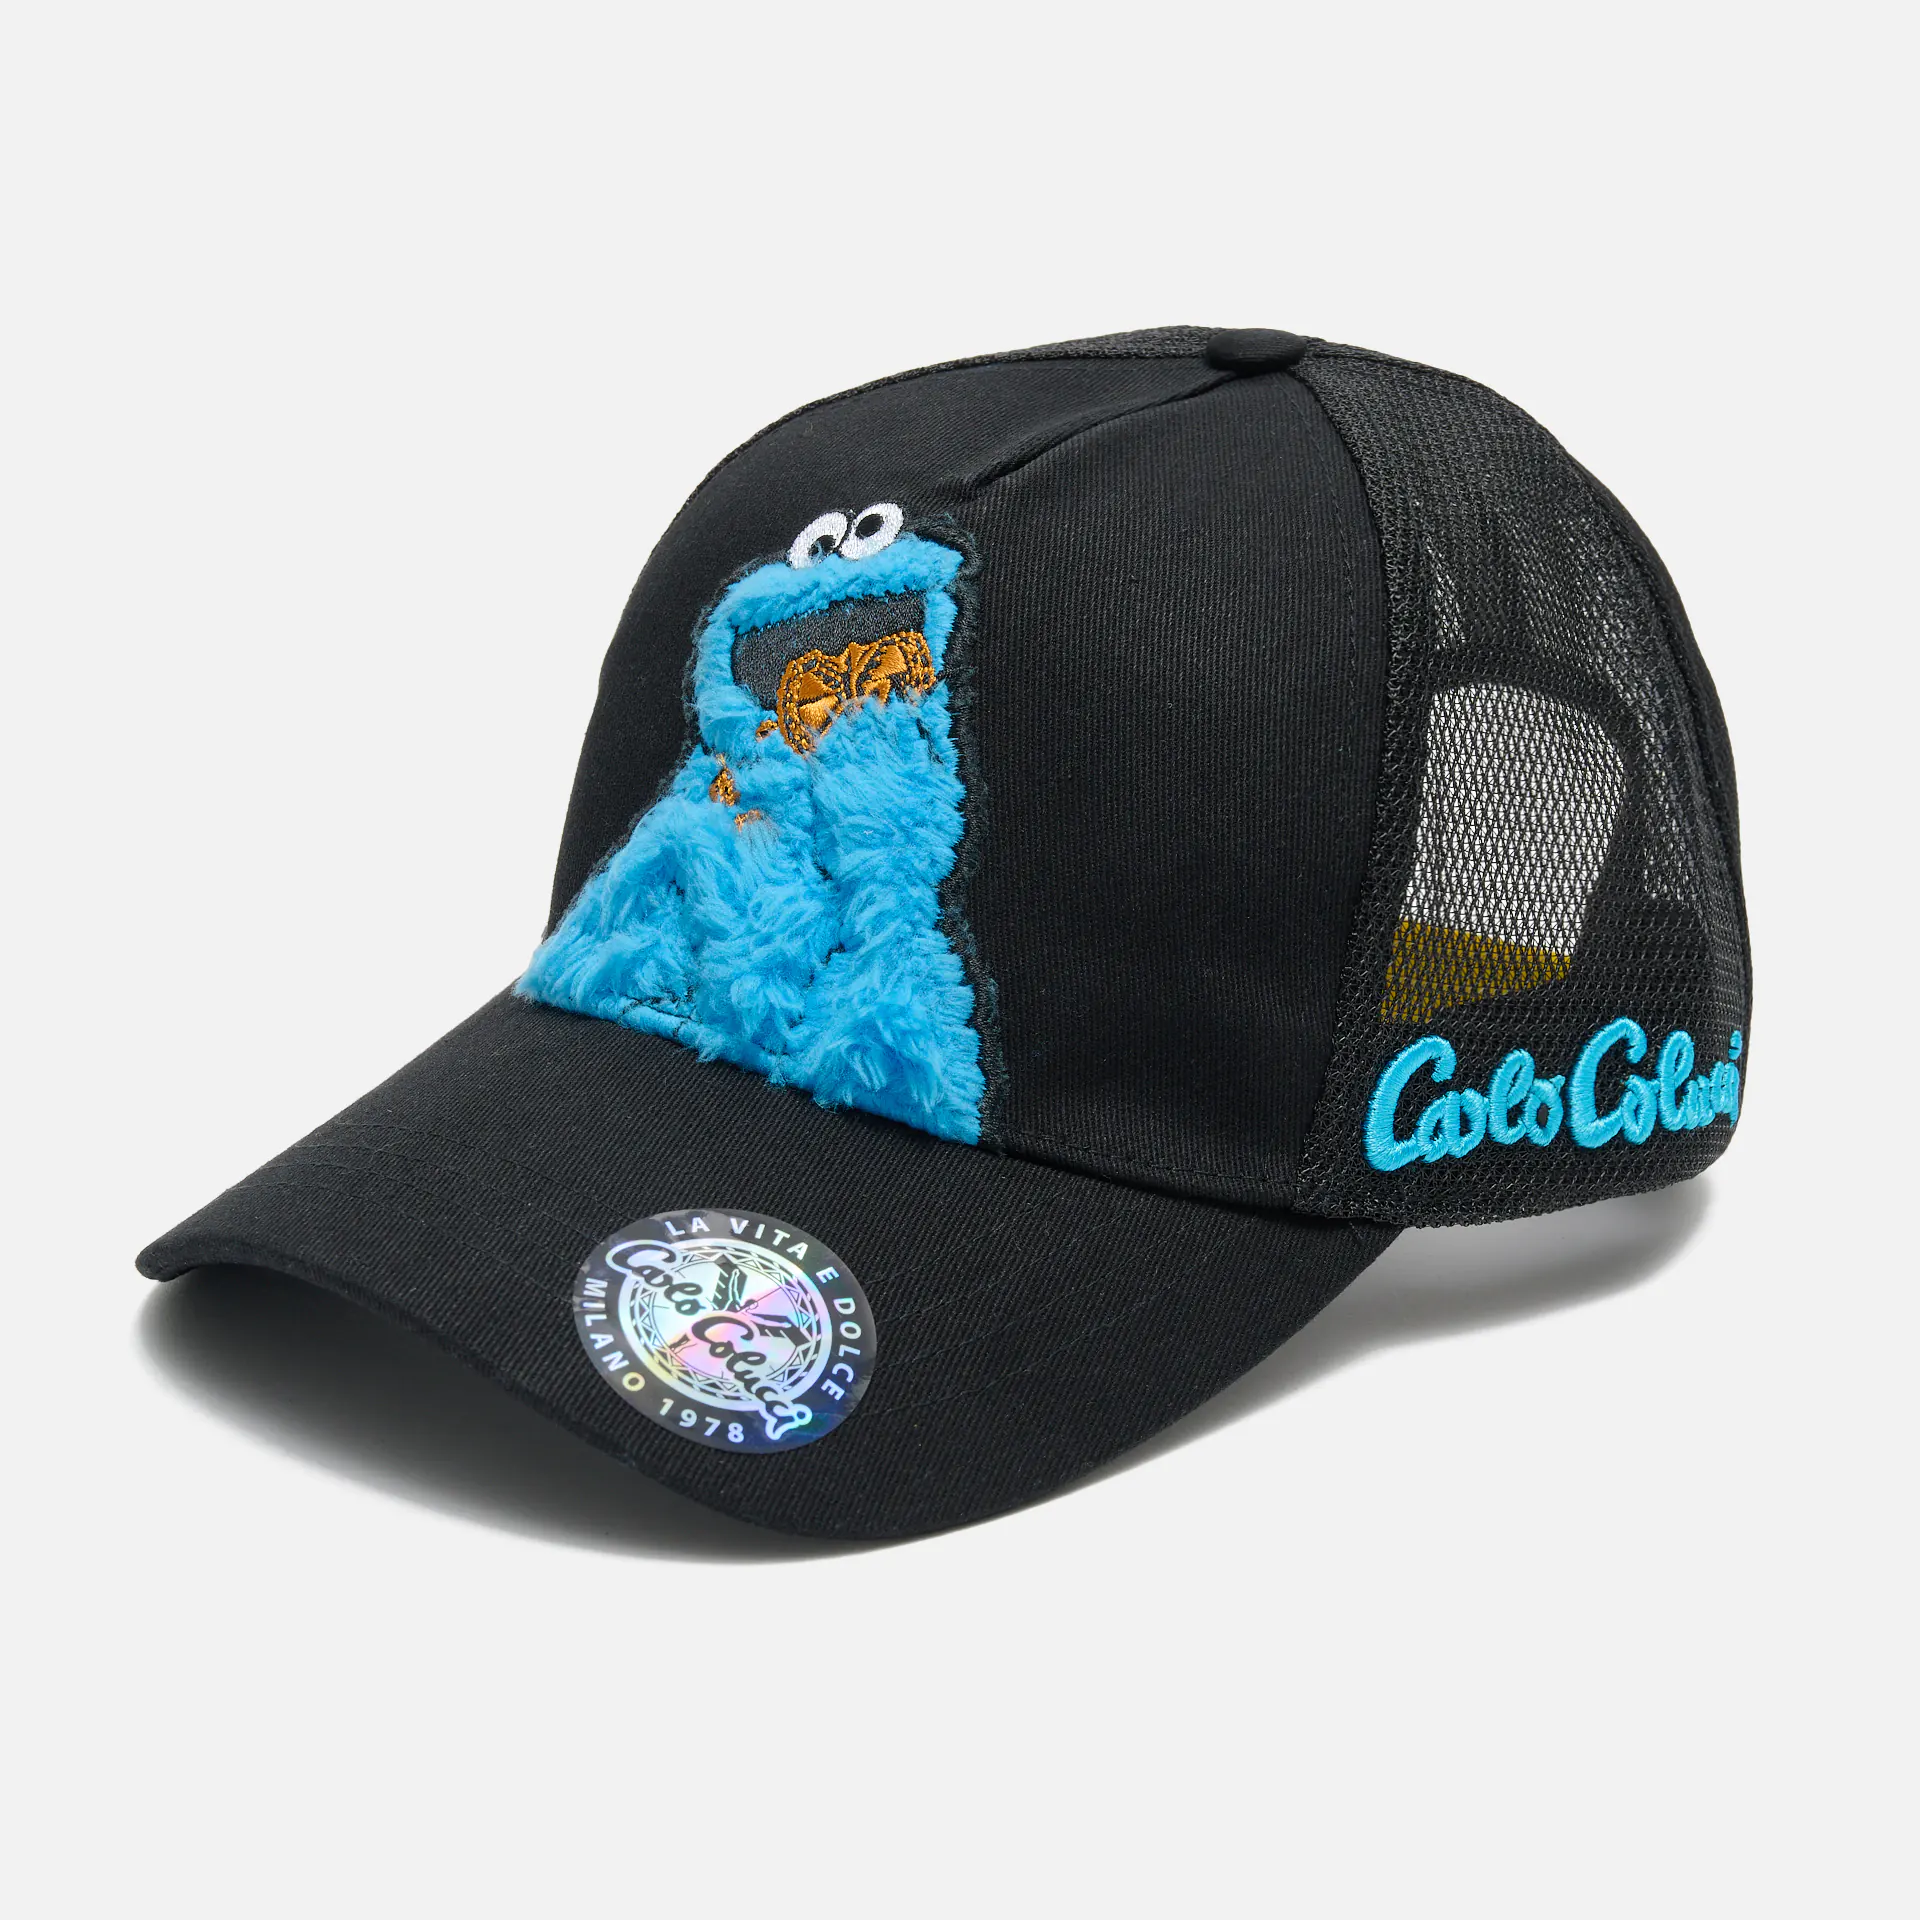 Carlo Colucci Sesame Street Cookie Monster Trucker Cap Black